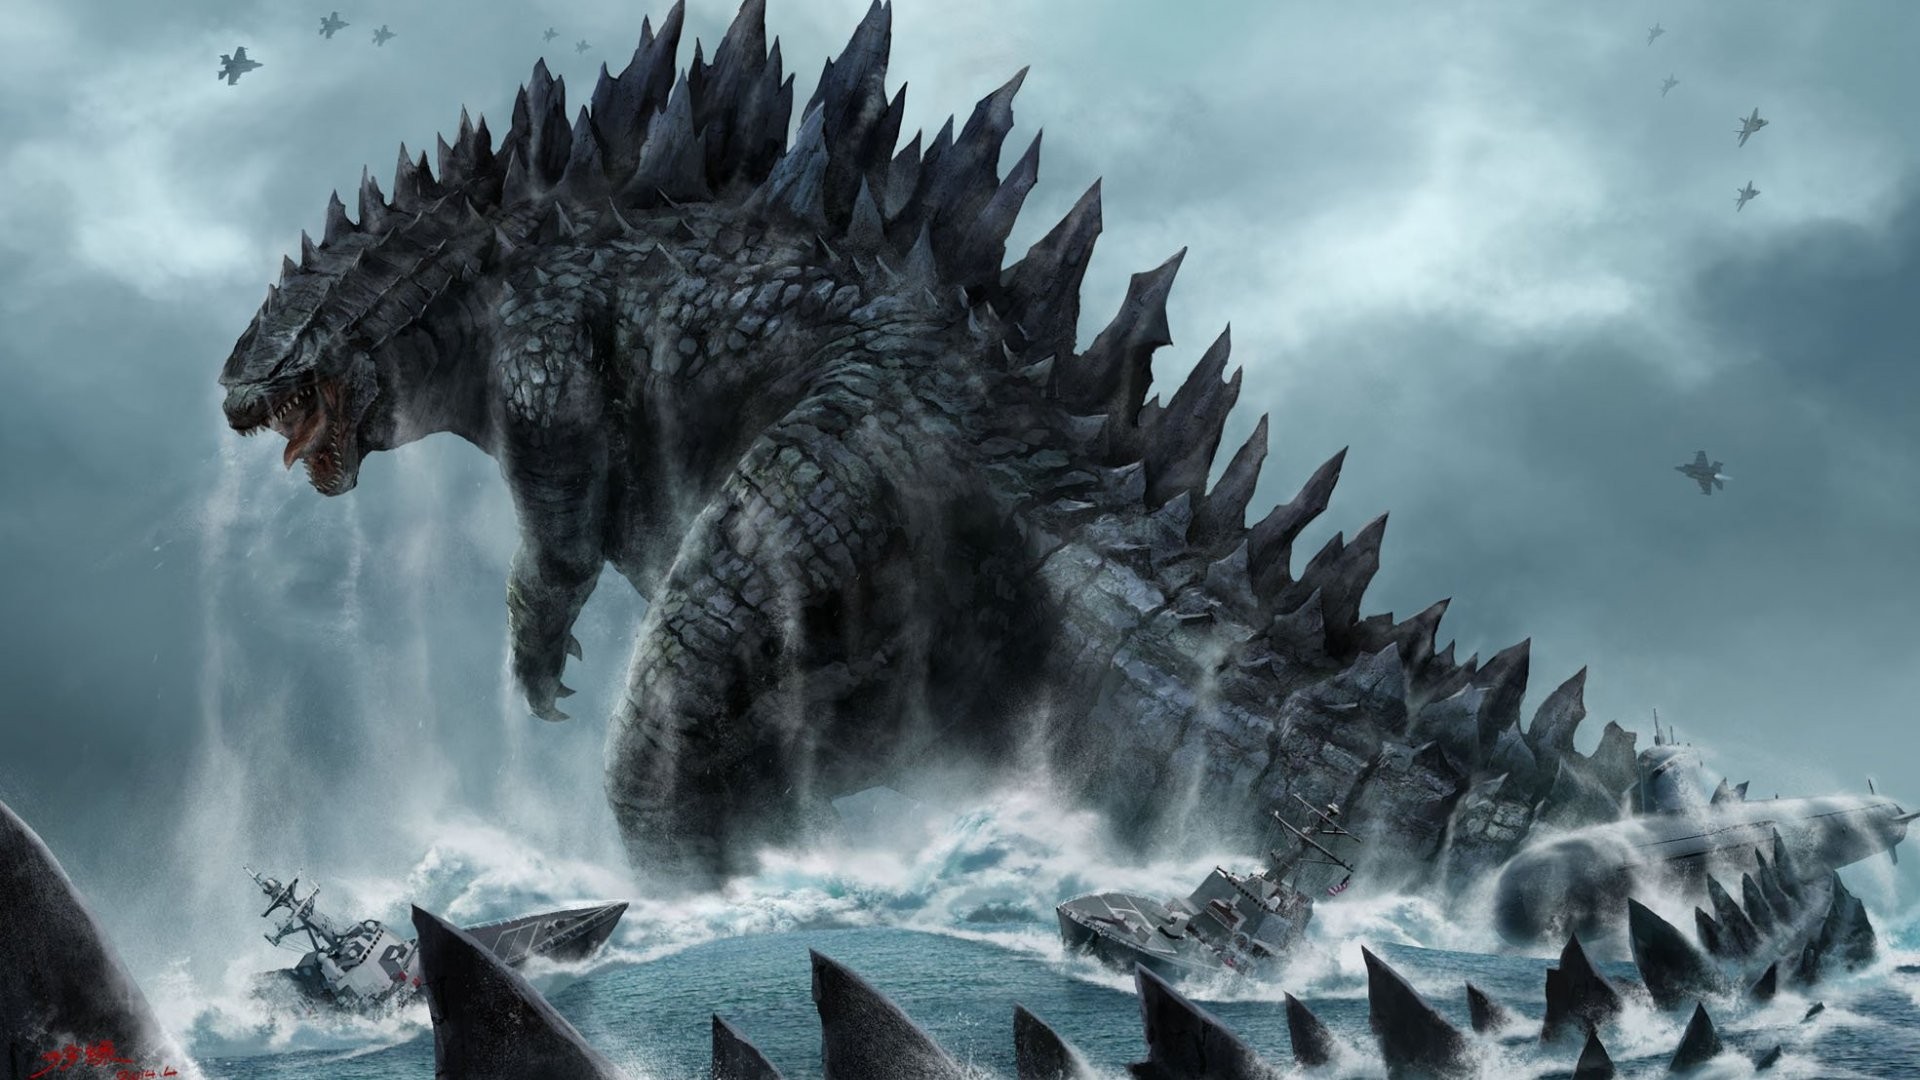 General 1920x1080 fantasy art digital art creature Godzilla boat water sea waves aircraft battle ship submarine clouds kaiju